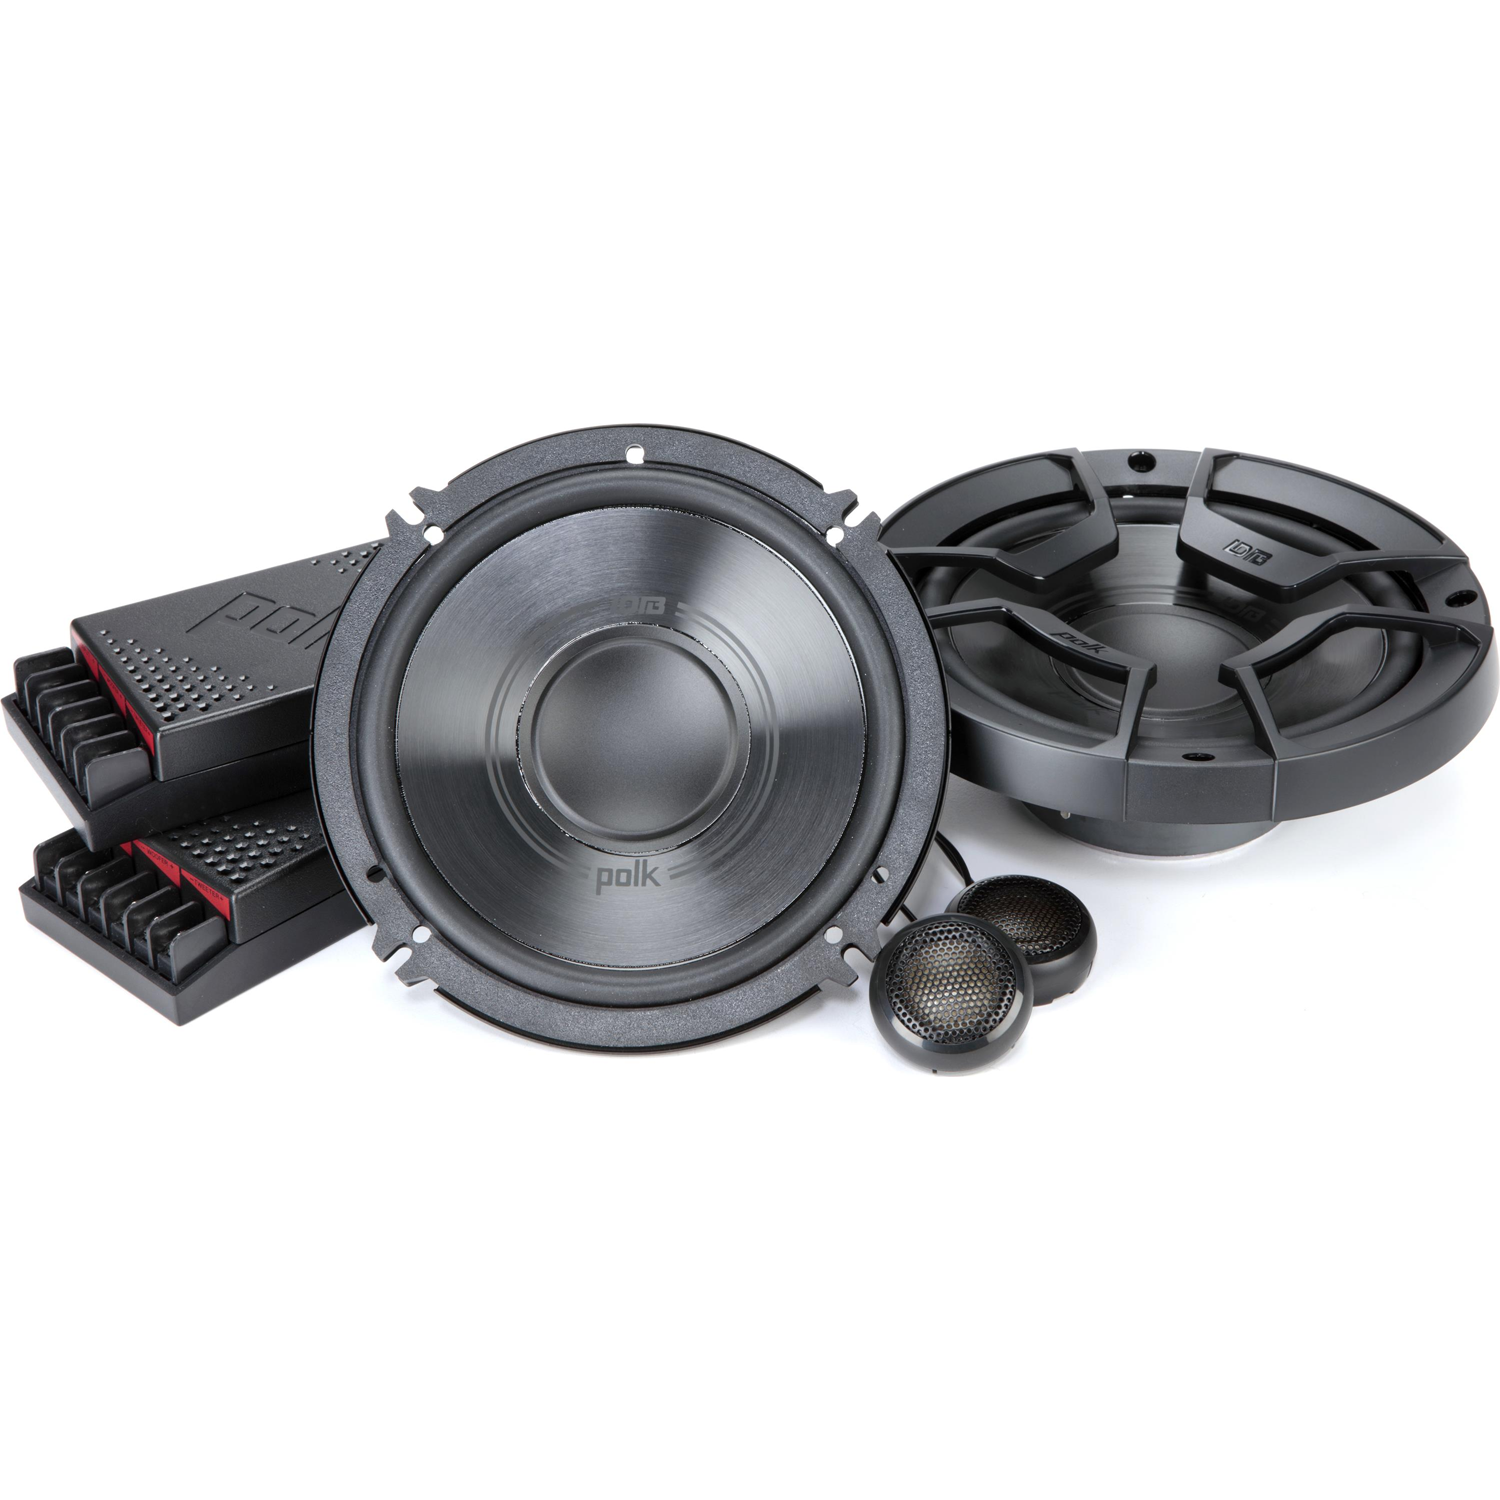 POLK AUDIO DB 6502 DB+ Series 6-1/2" Component Speaker System